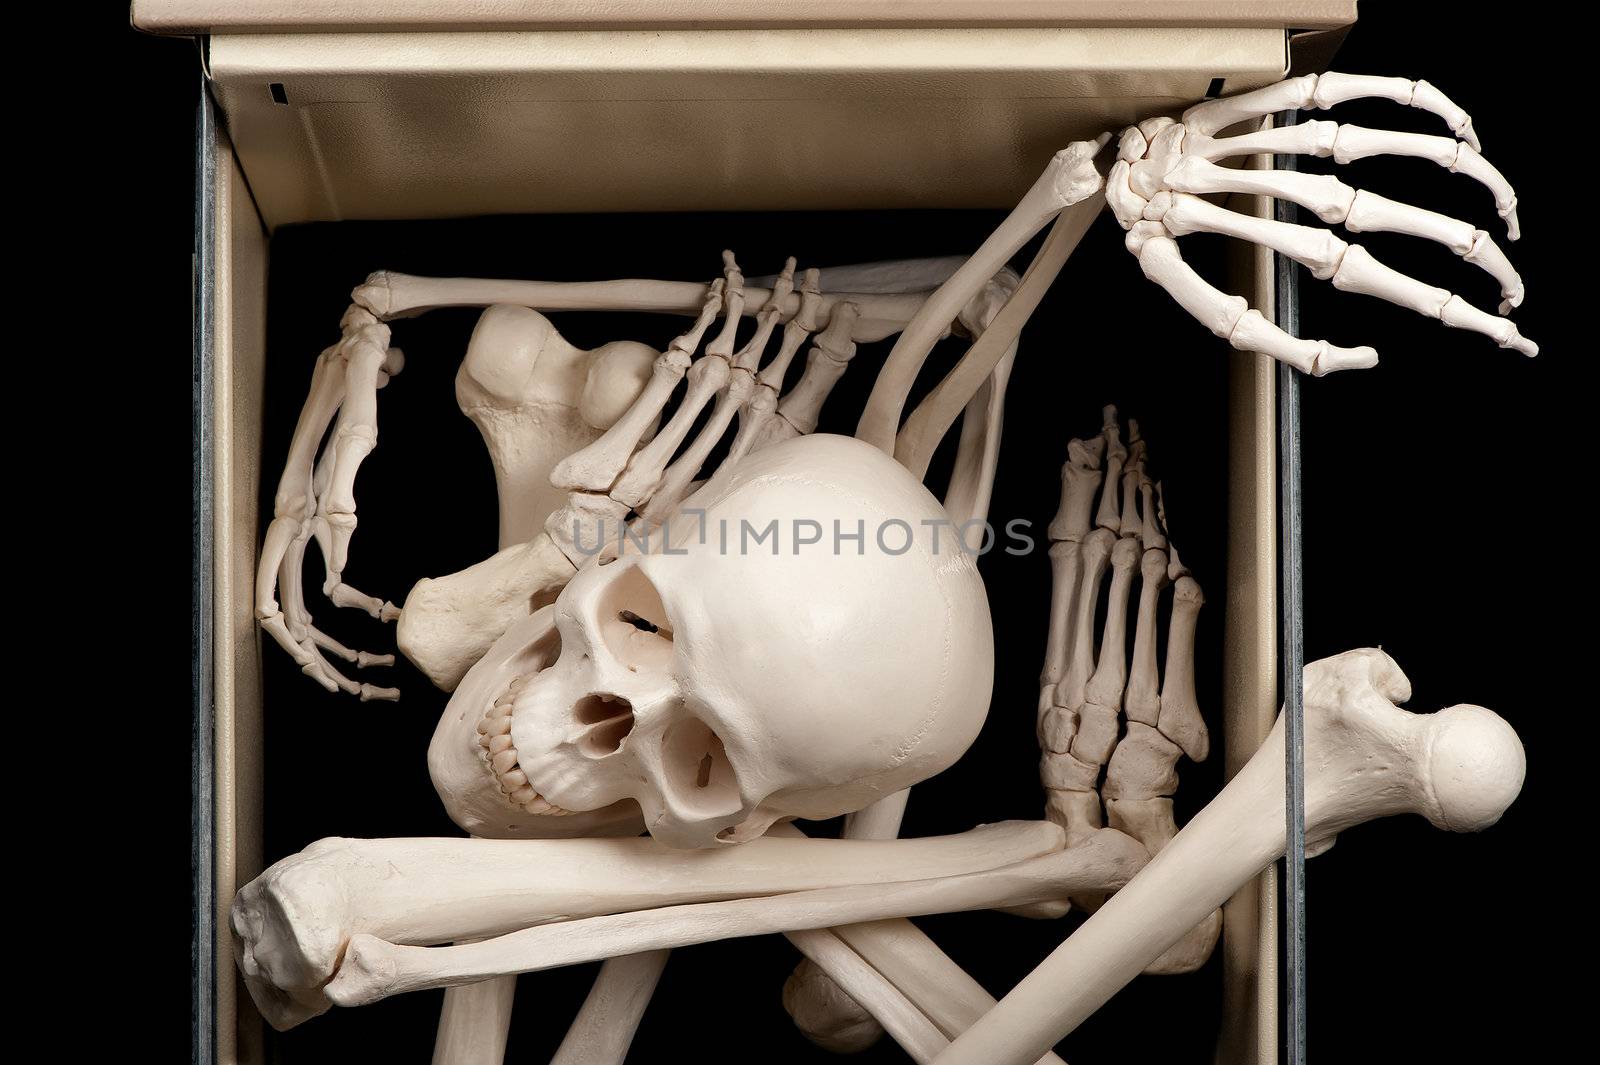 Skeleton in drawer by Zafi123